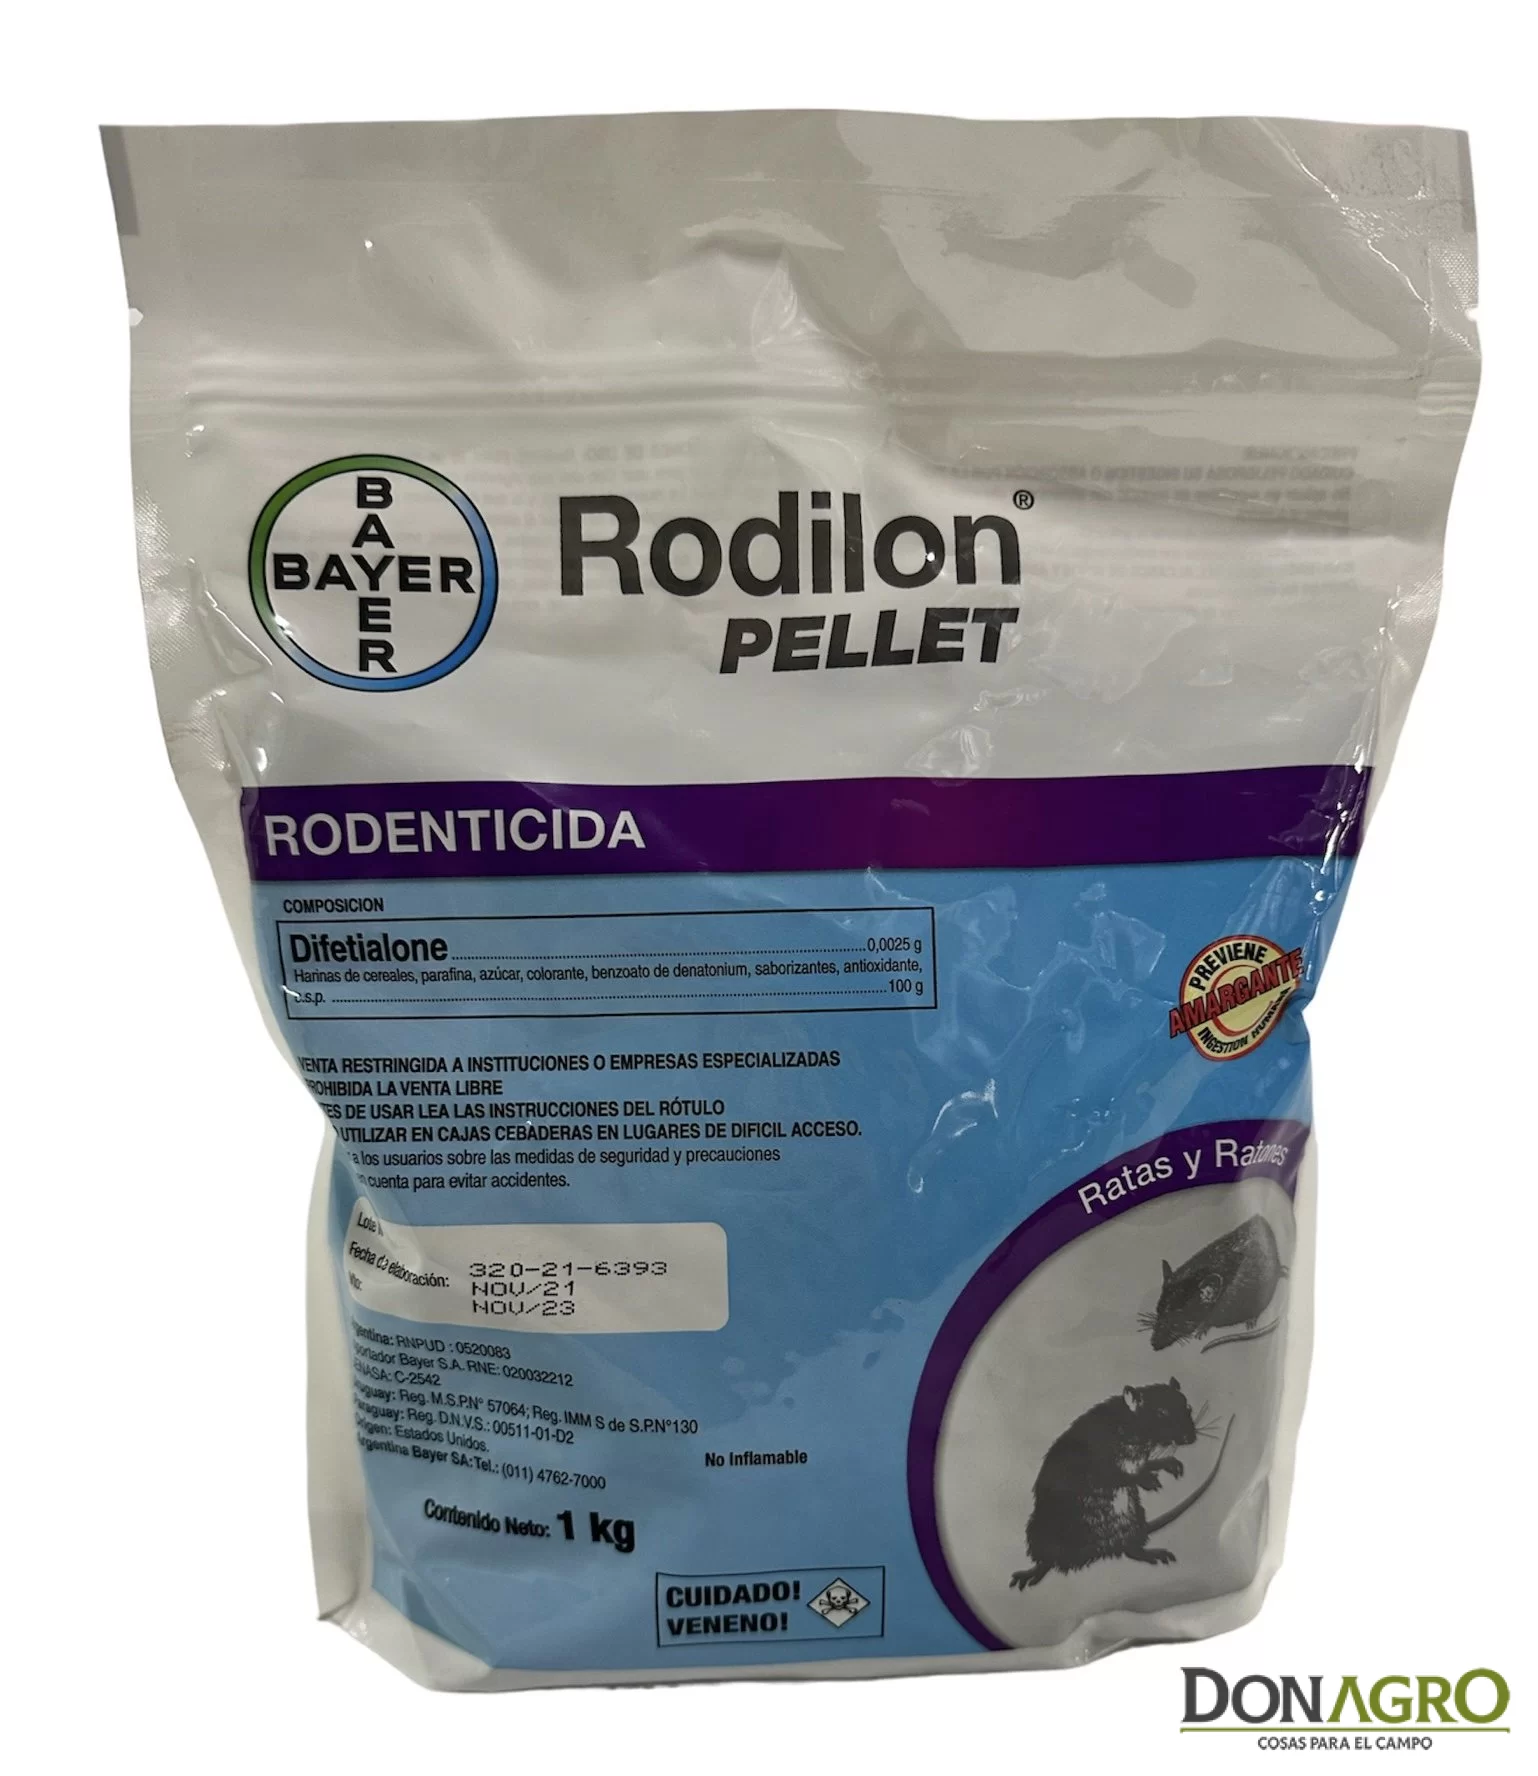 Rodenticida Pellet X 1KG RODILON BAYER